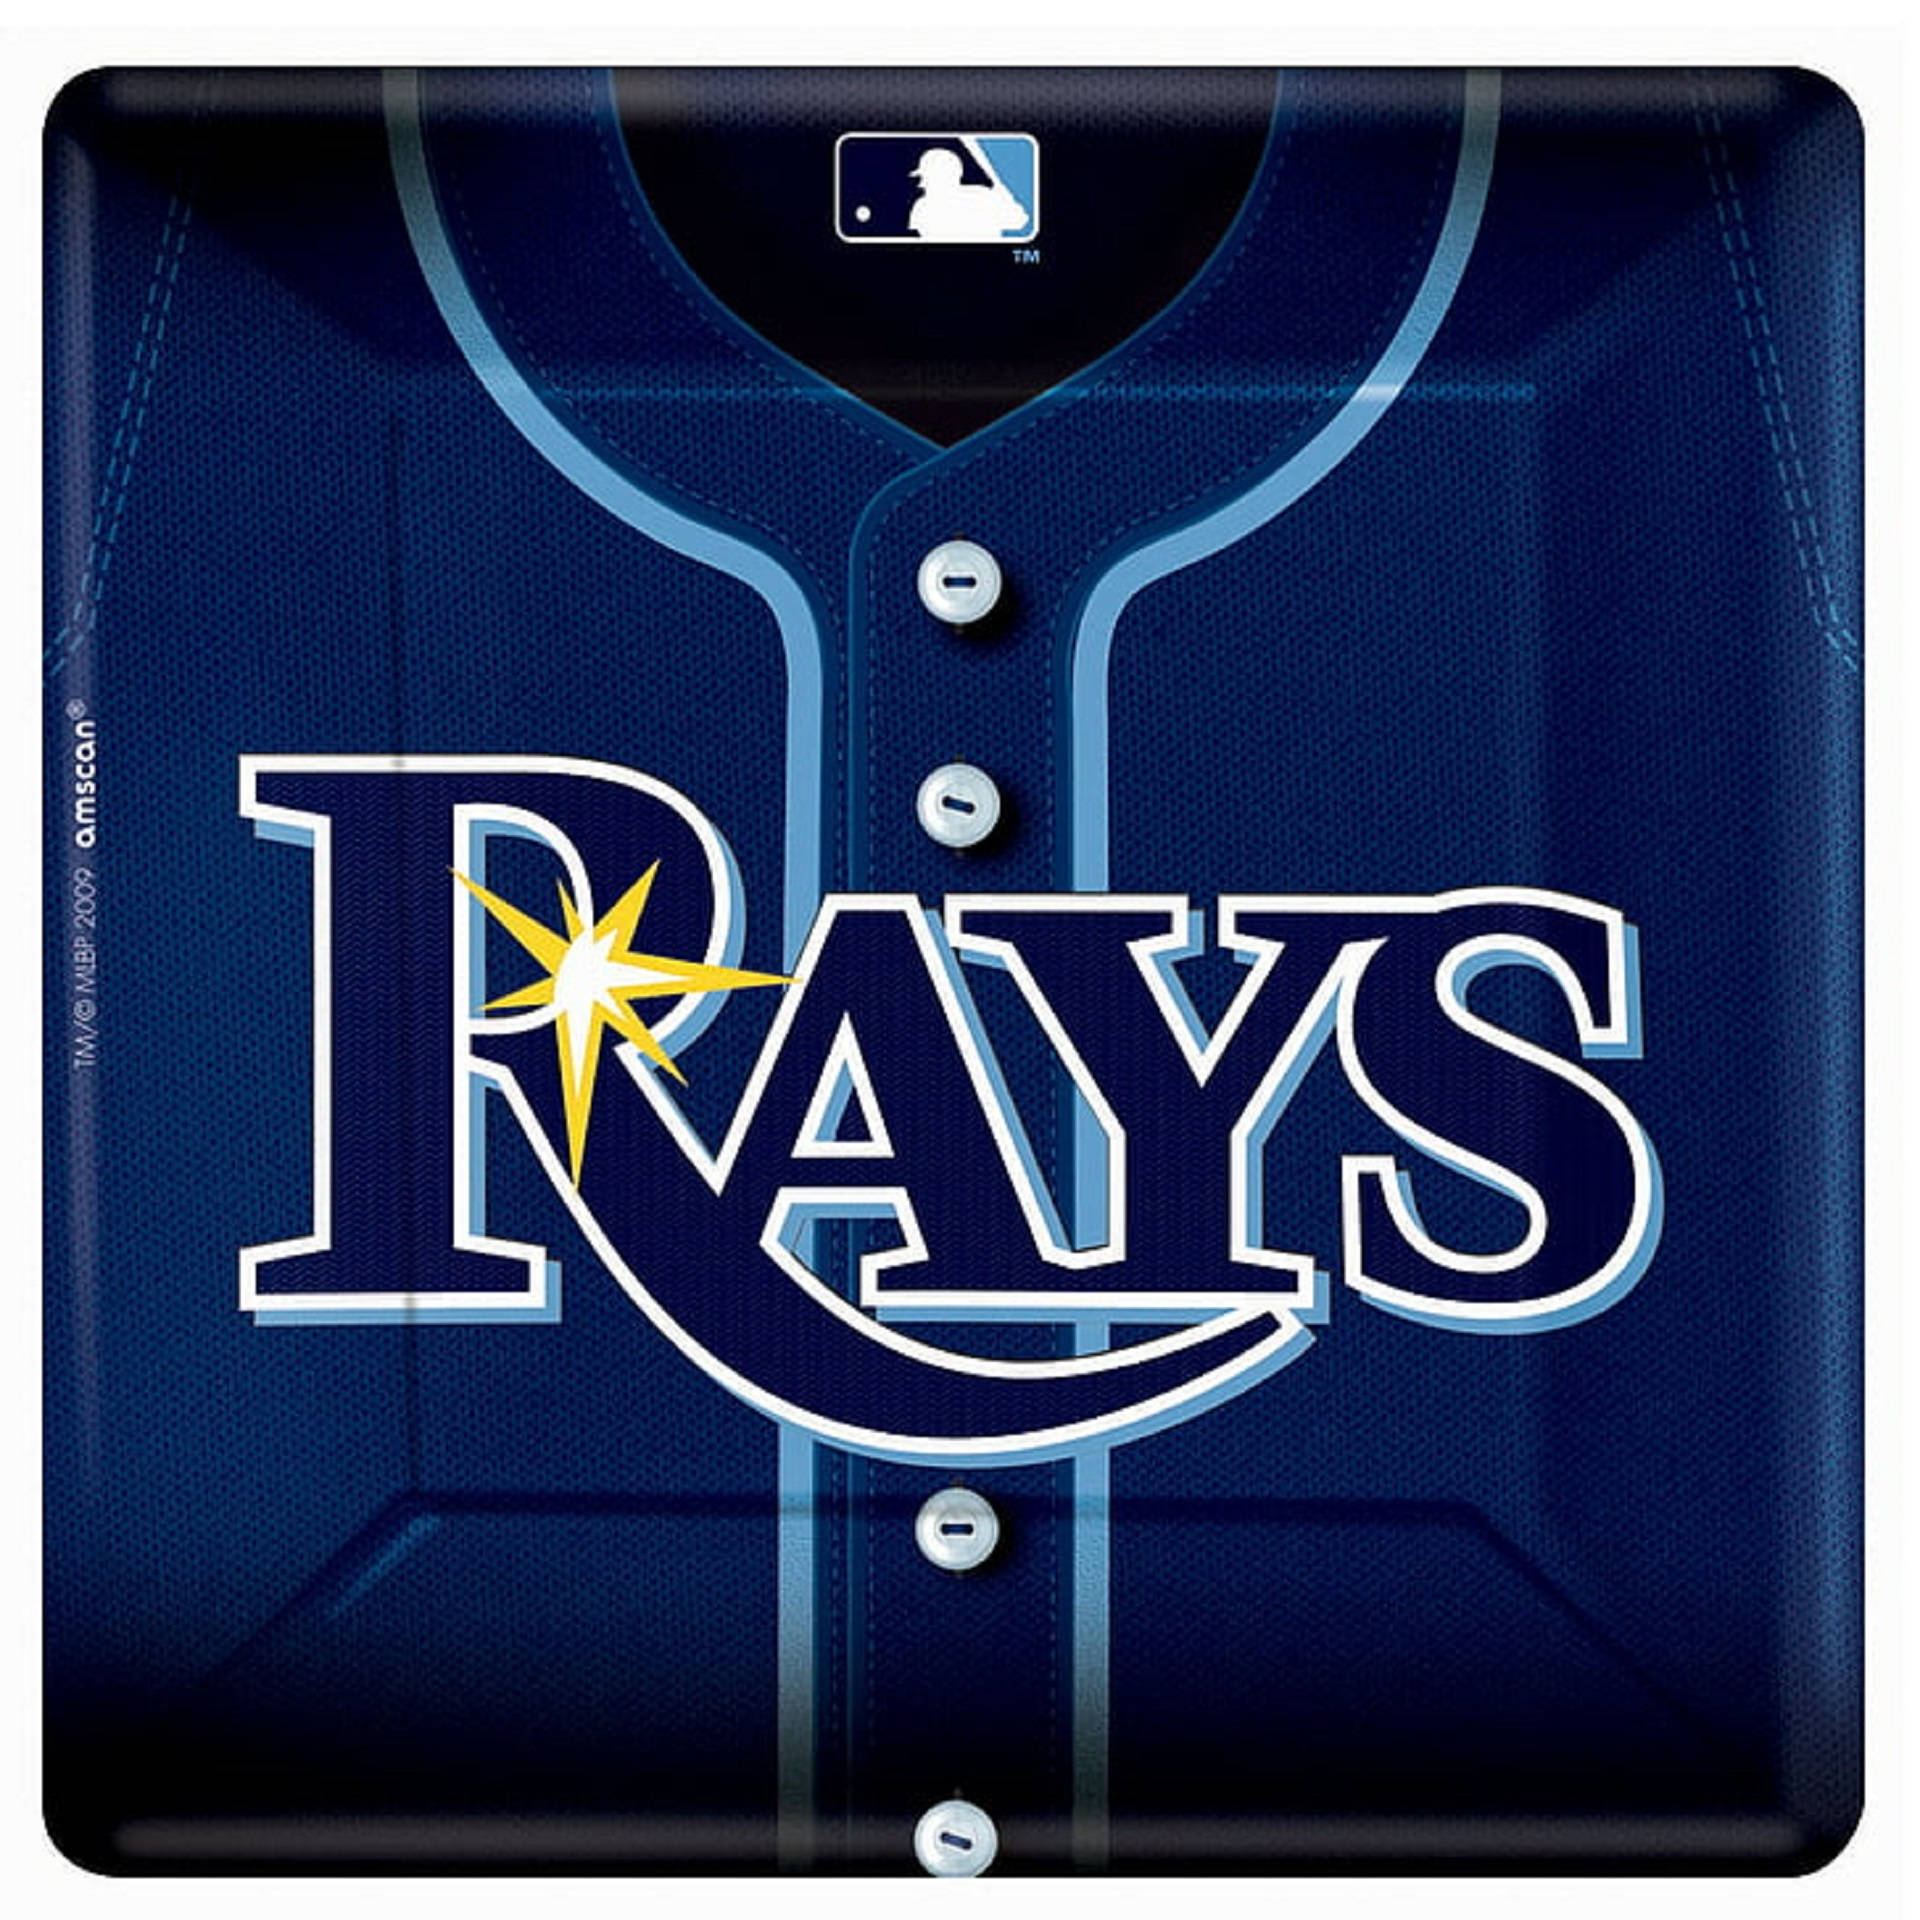 Tampa Bay Rays Baseball Uniform Background